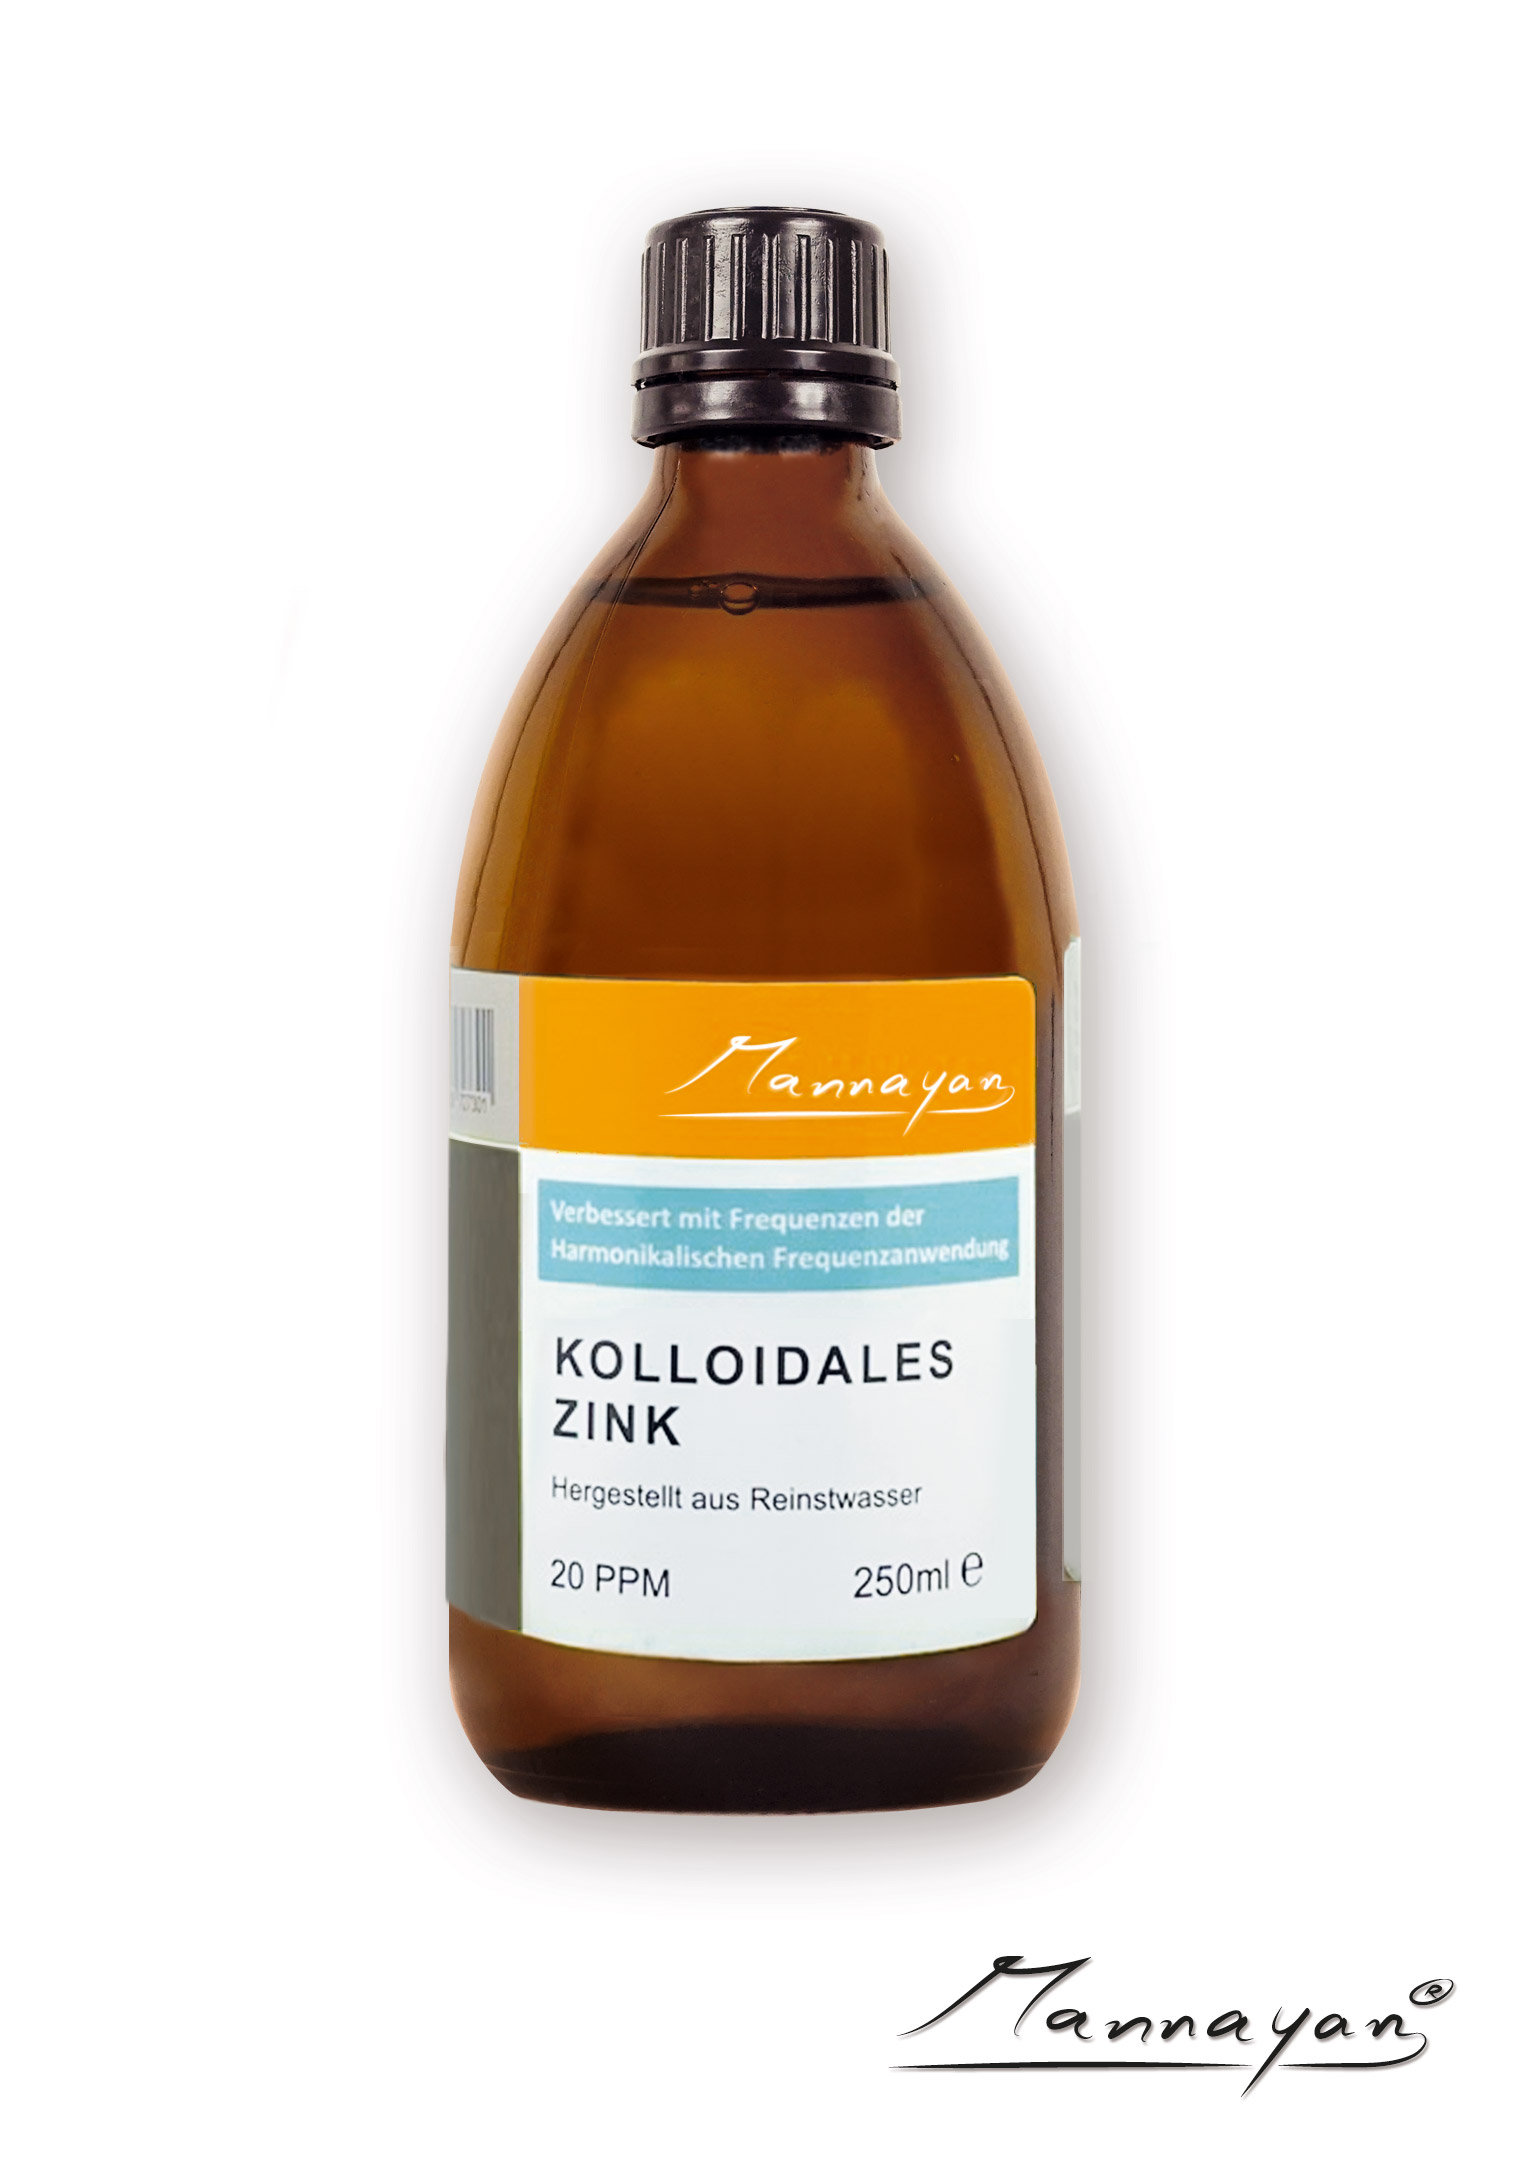 Mannayan Kolloidales Zink 250 ml